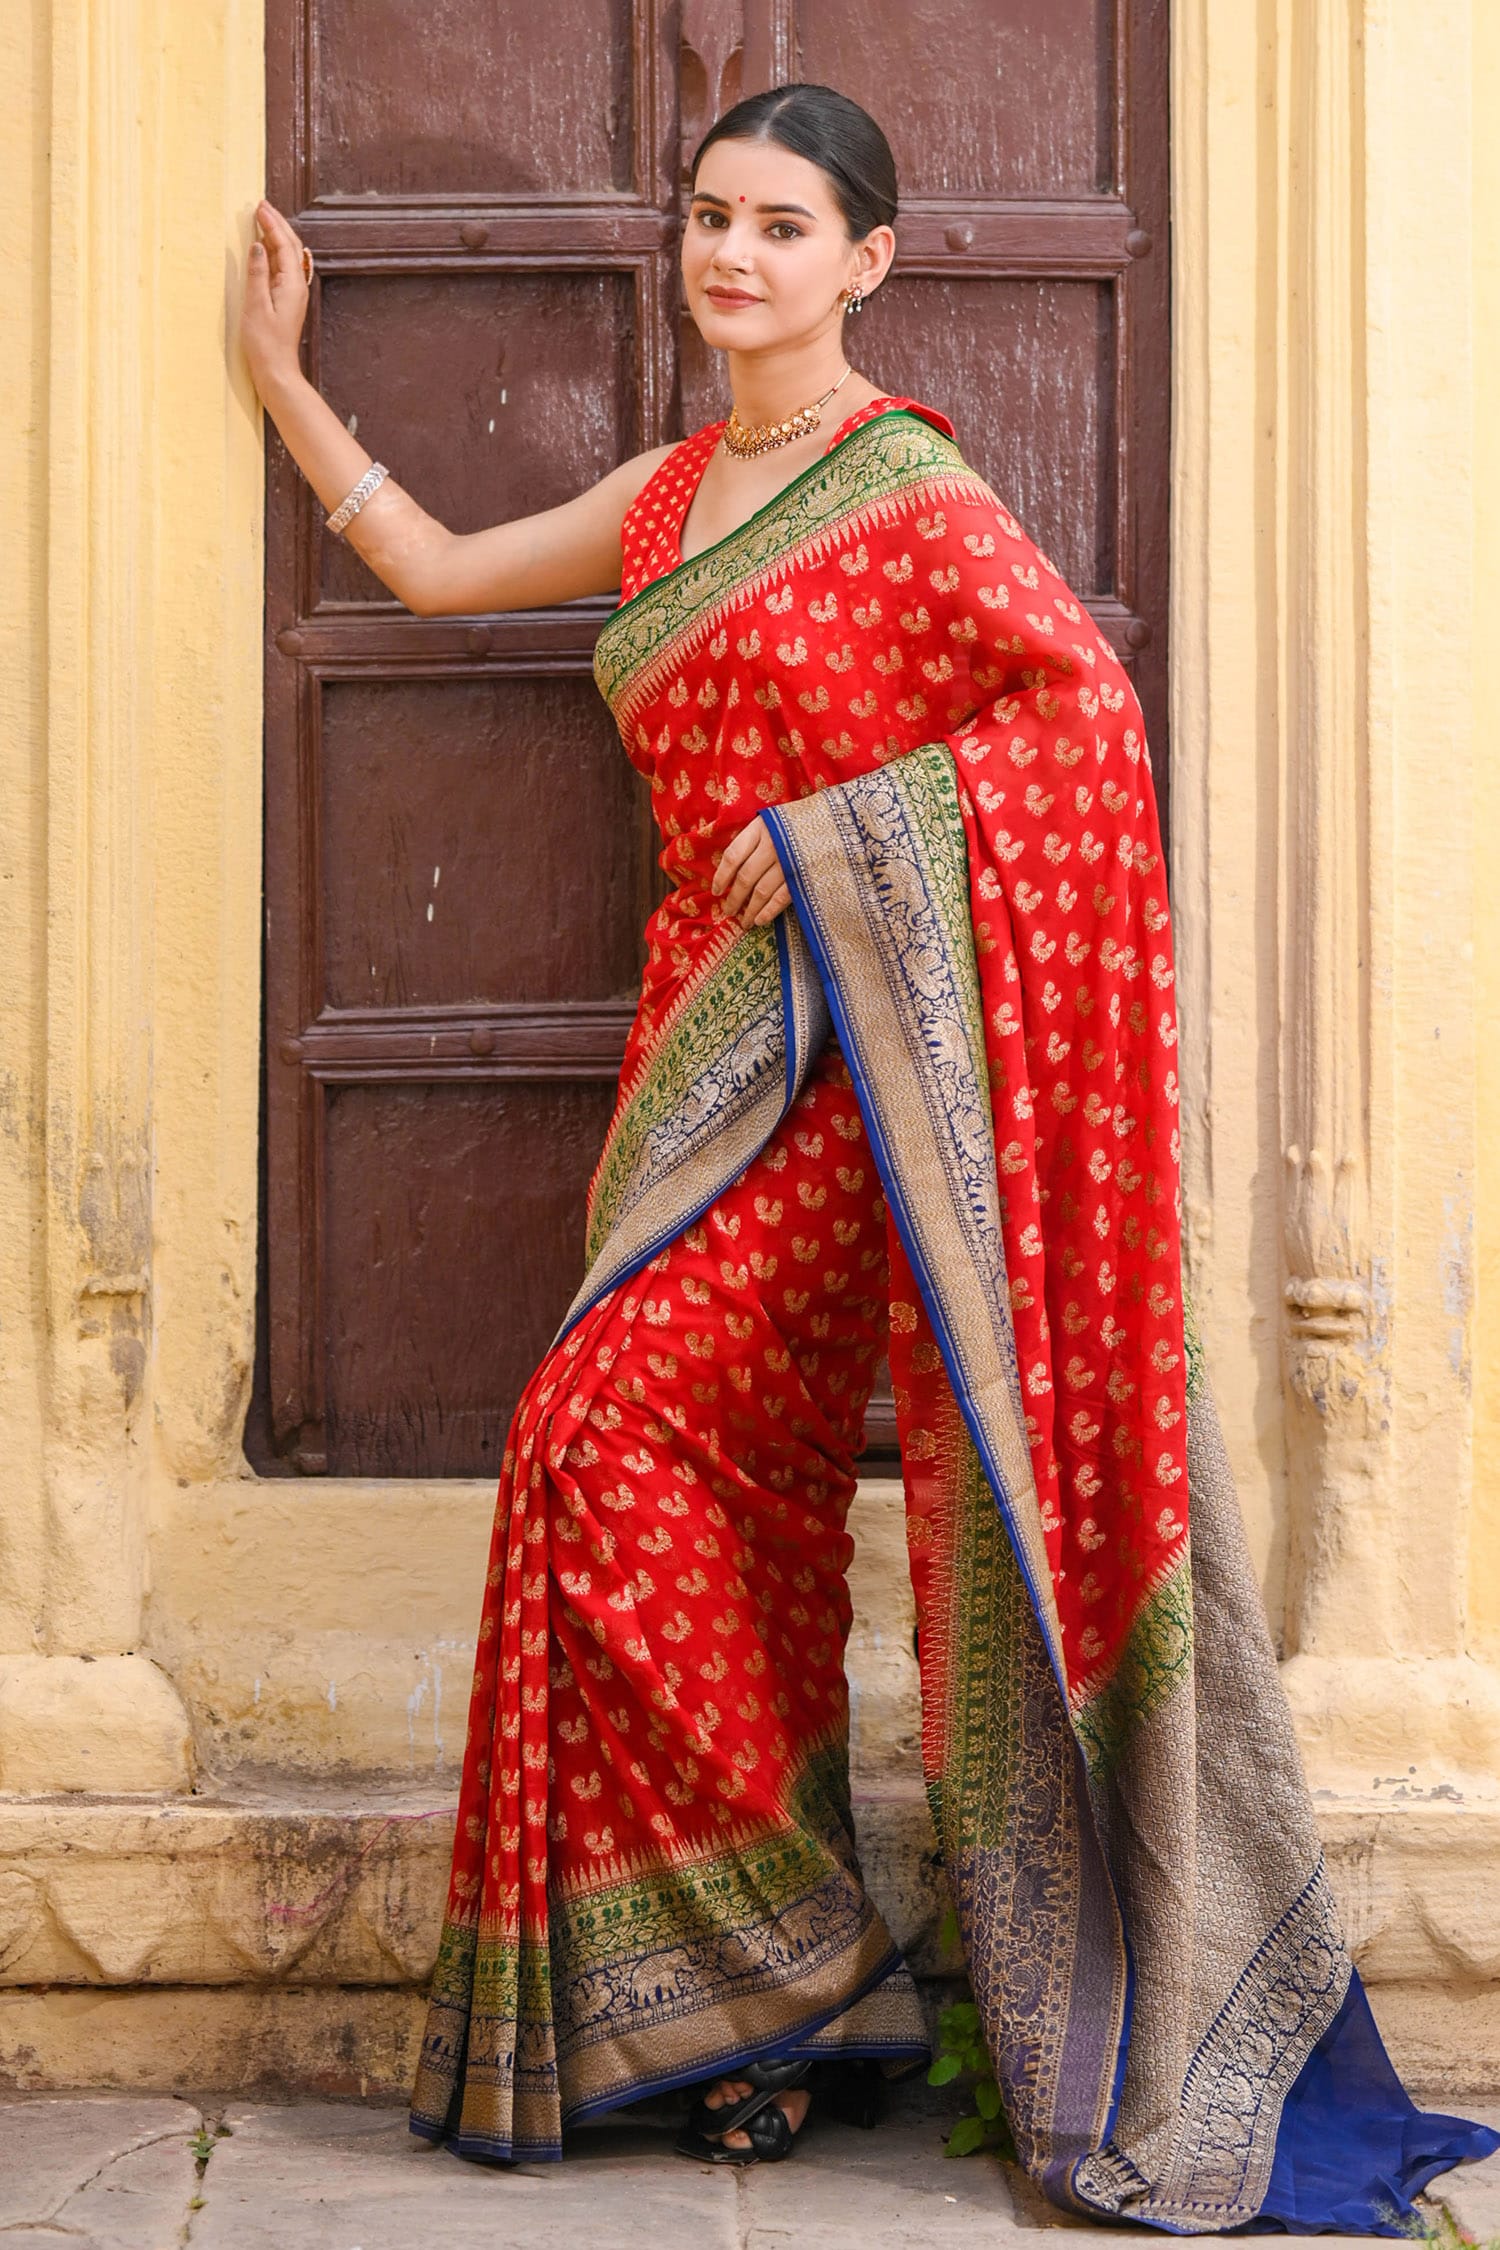 Lehenga style saree, Green crepe embroidered sari, U neck blouse